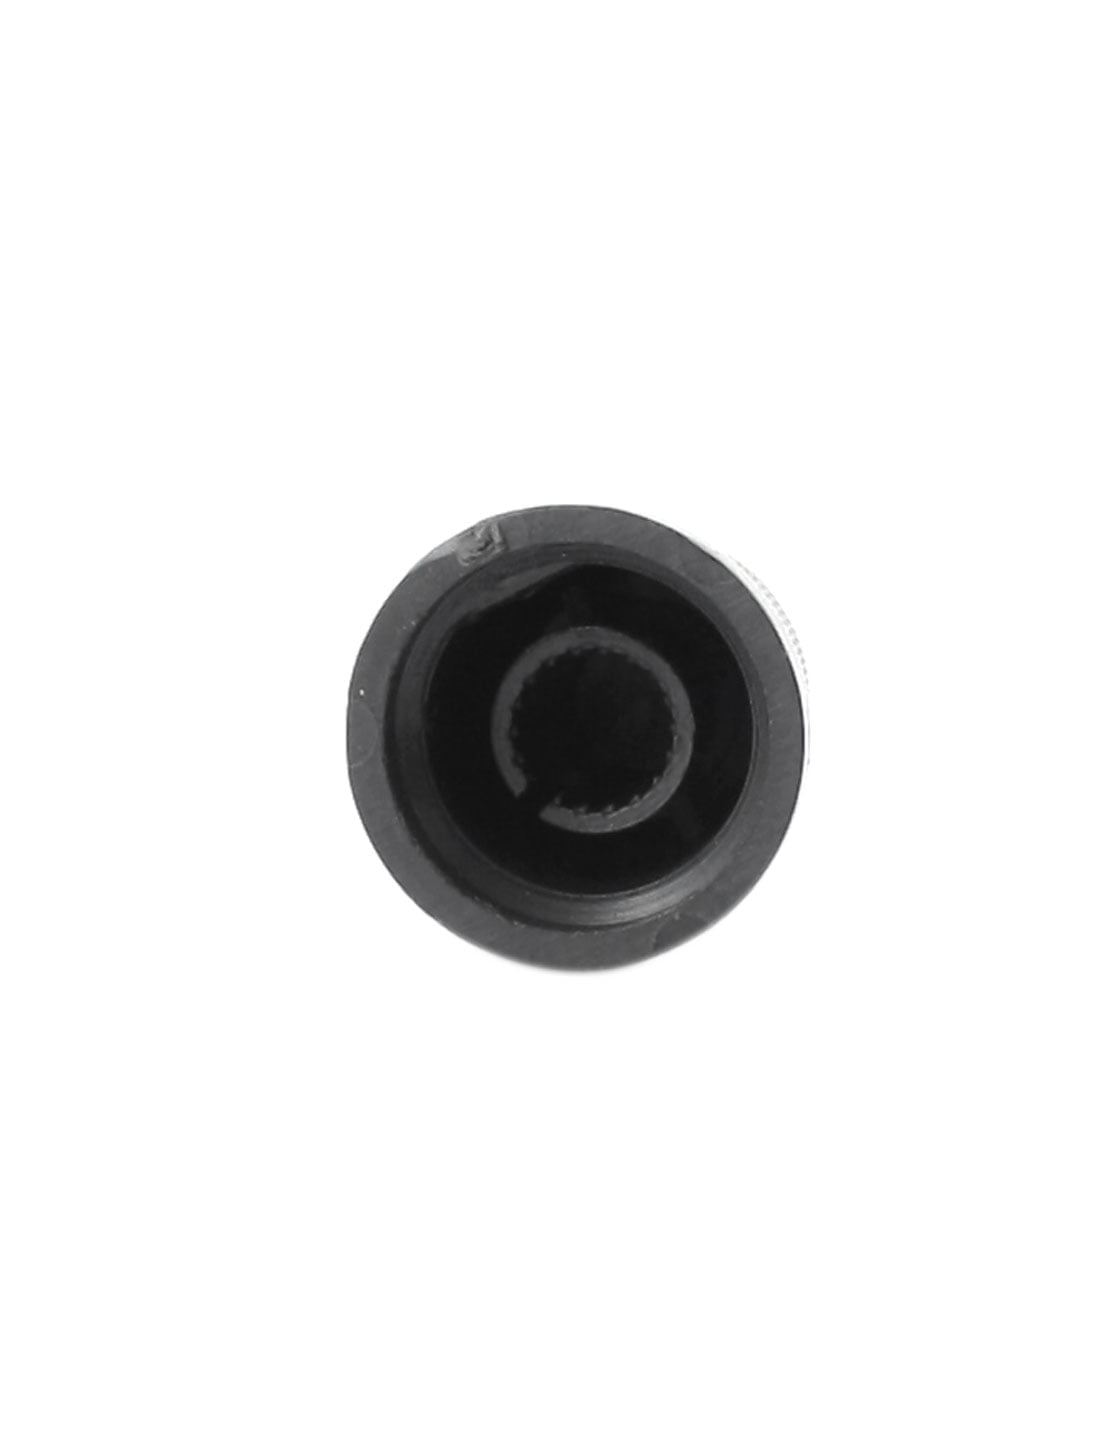 40pcs 6mm Knurled Shaft Black Top Taper Volume Knob Cap for Potentiometer Pot 